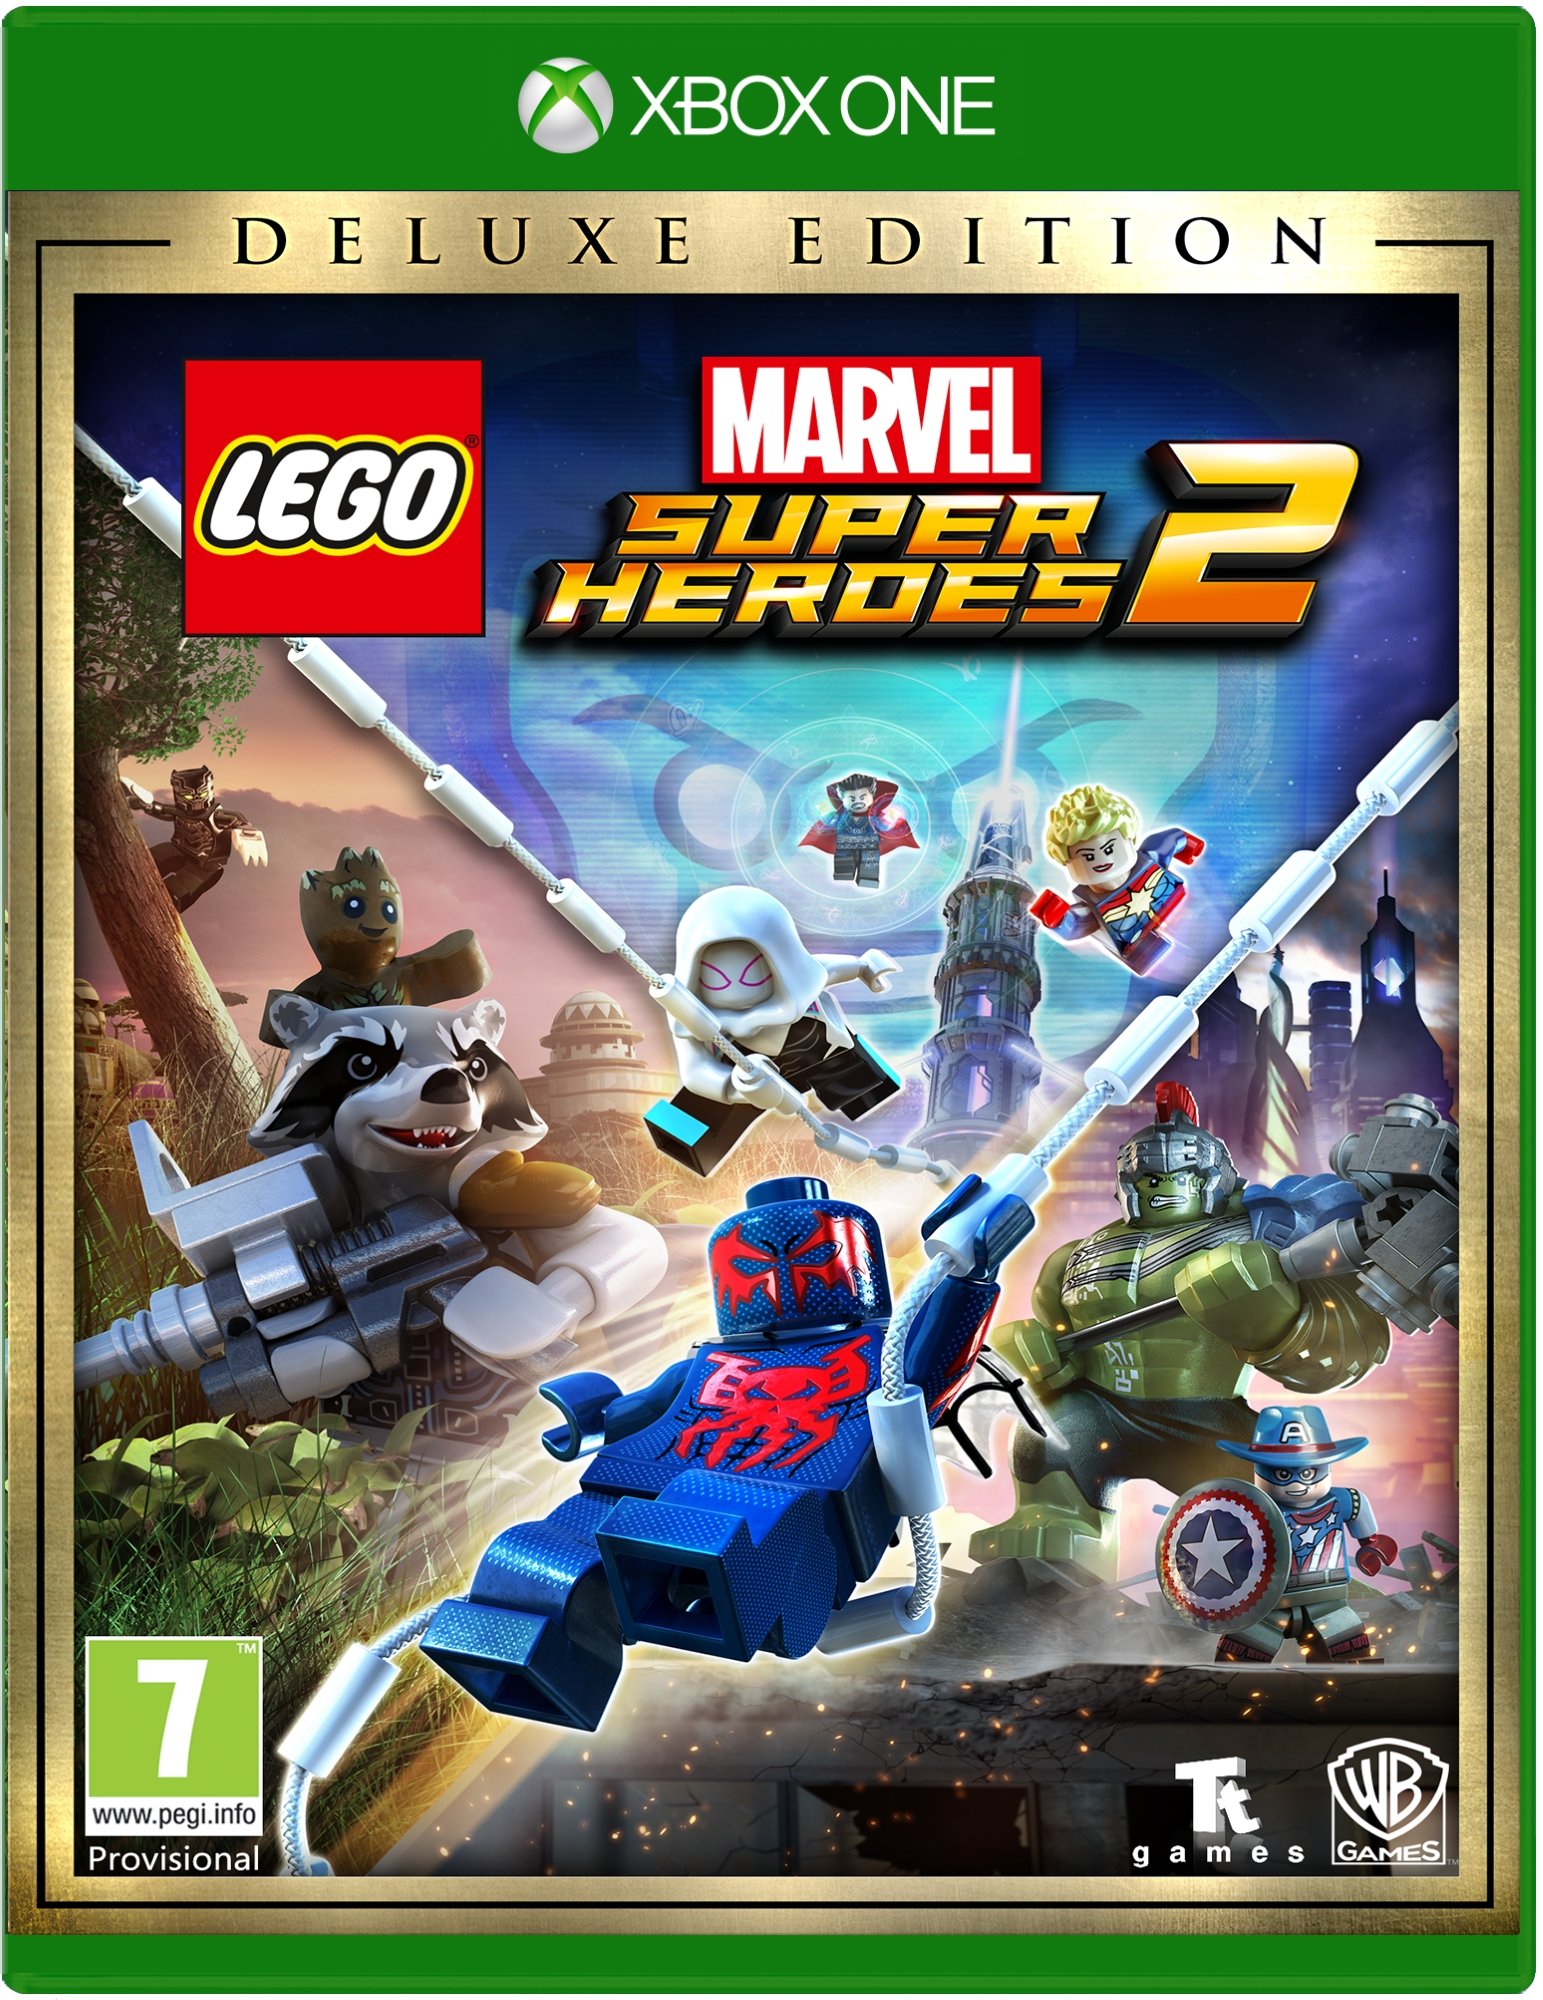 Køb LEGO Marvel Super Heroes 2 - Deluxe Edition - Xbox One - Engelsk - Deluxe Edition - fragt